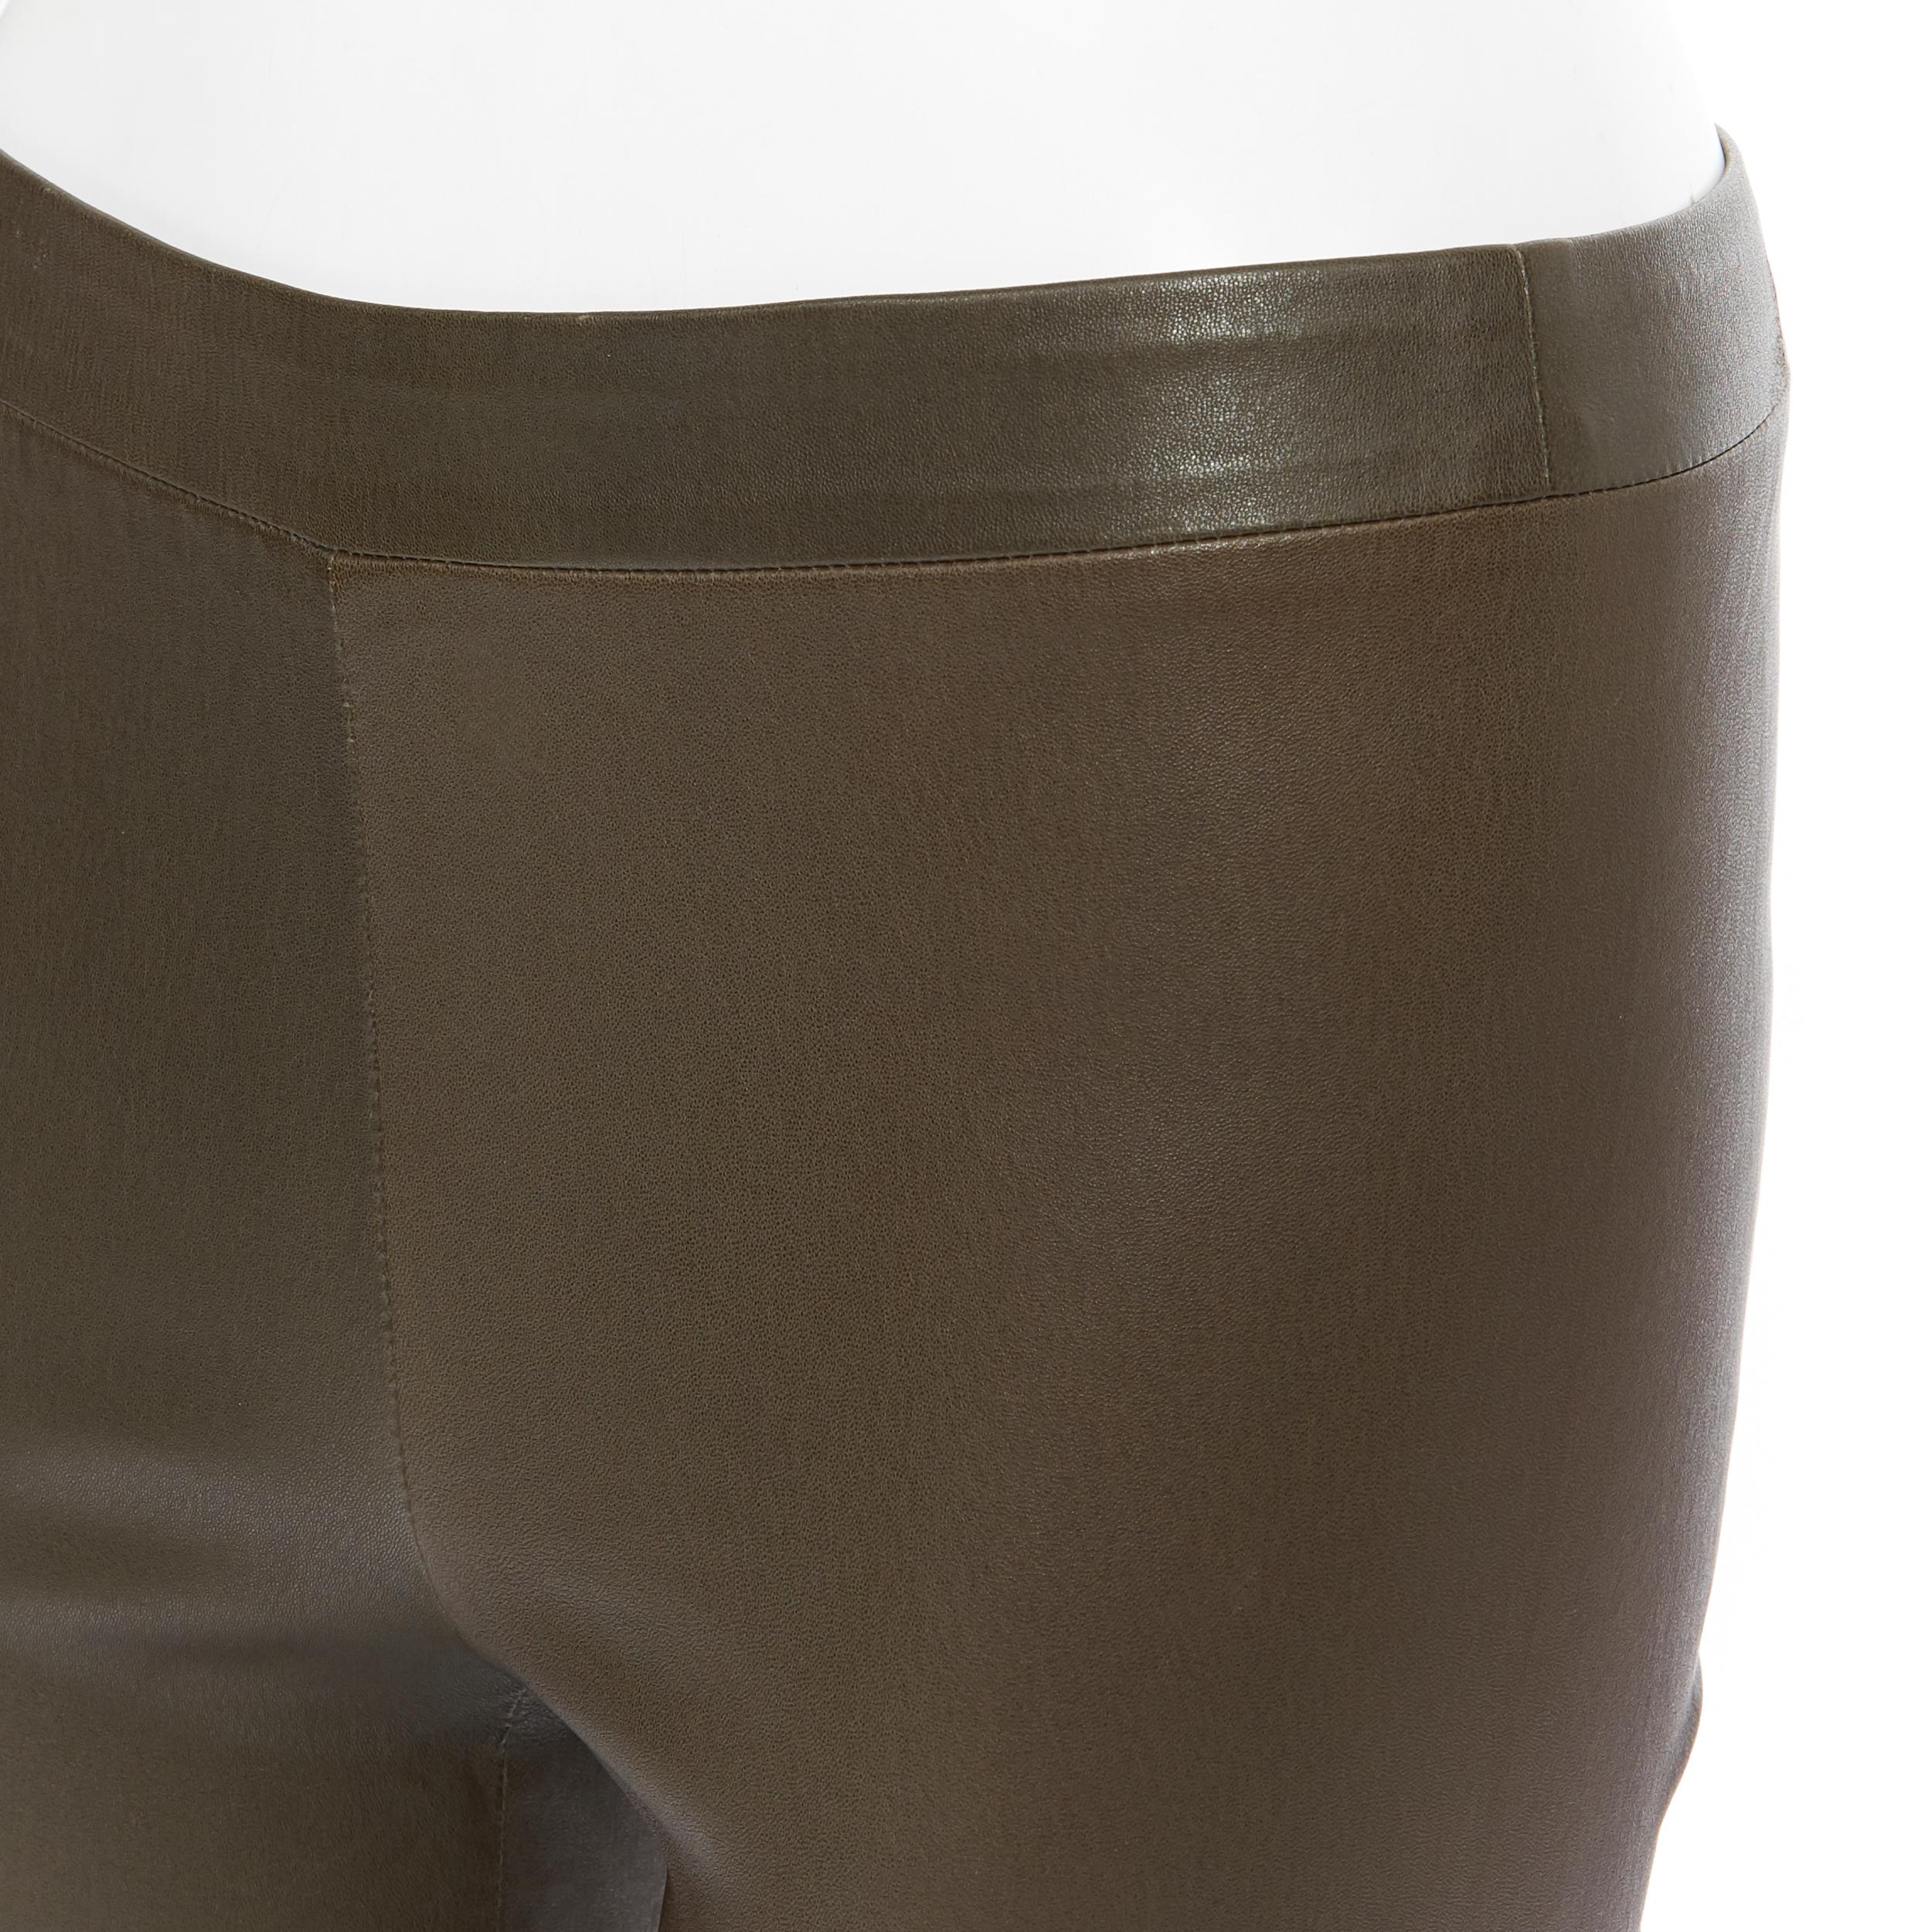 Women's VINCE 100% leather dark moss military green stretchy skinny leg pants XS